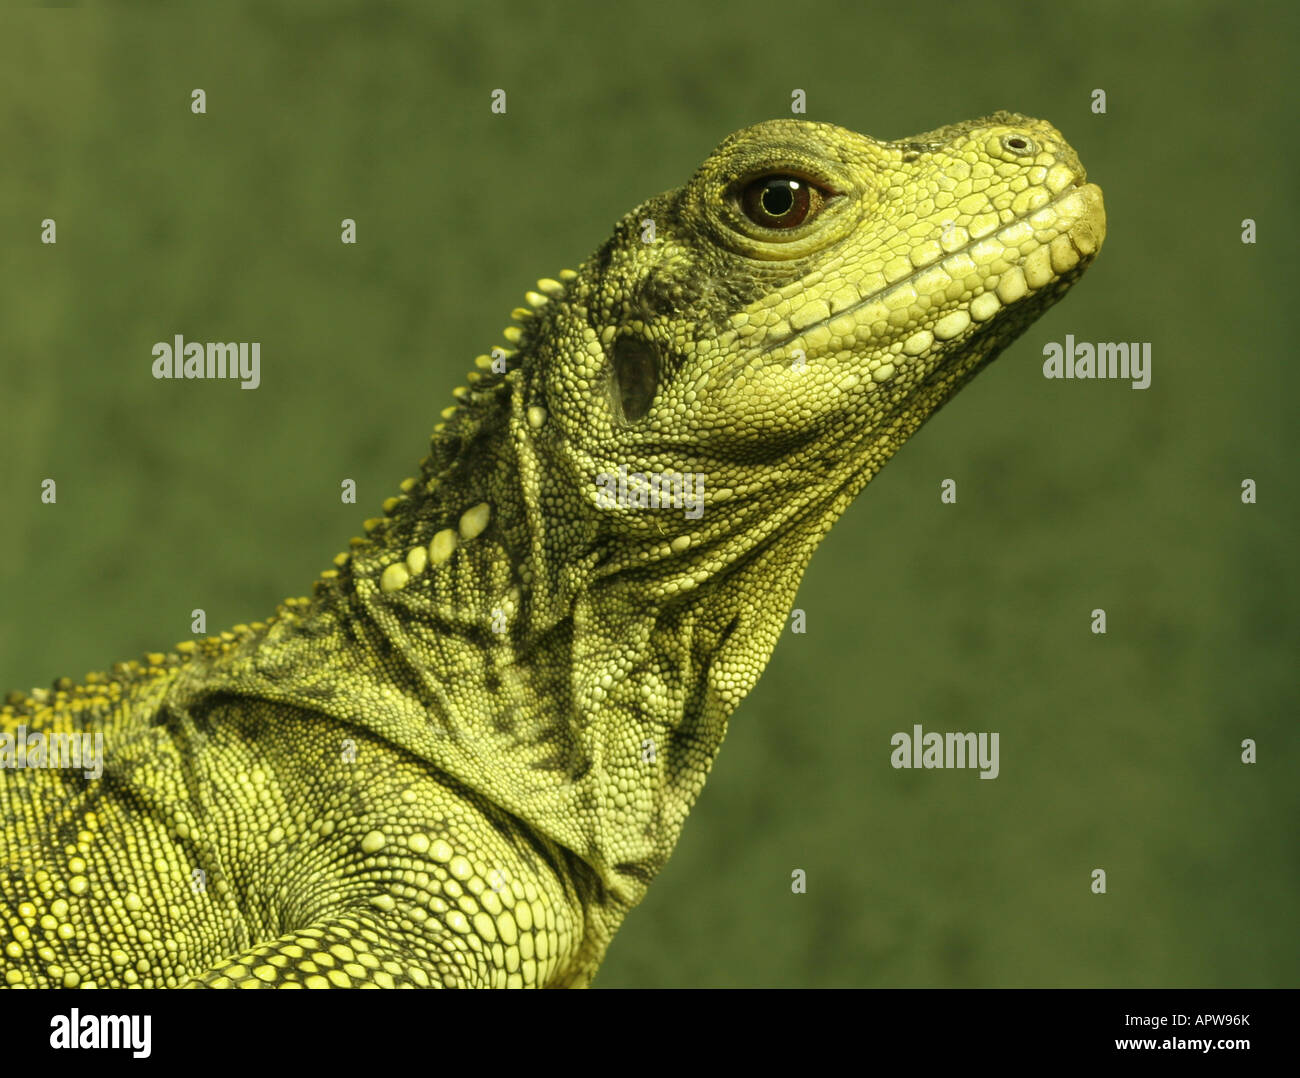 Iguana verde lizard close up della testa Foto Stock